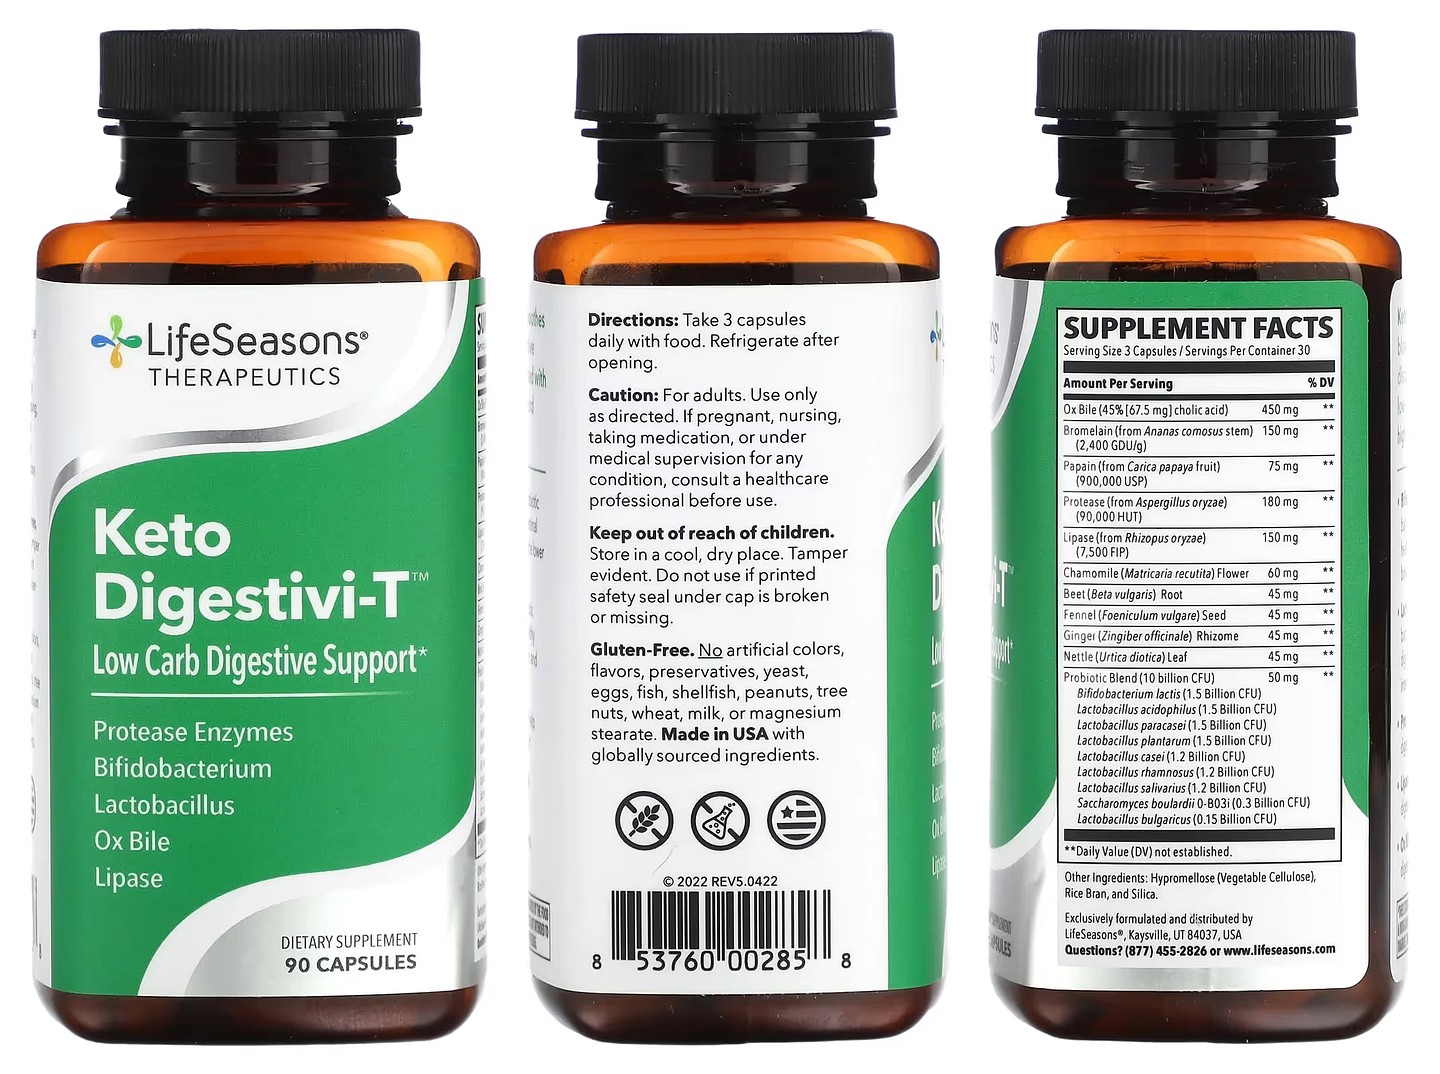 LifeSeasons, Keto Digestivi-T packaging